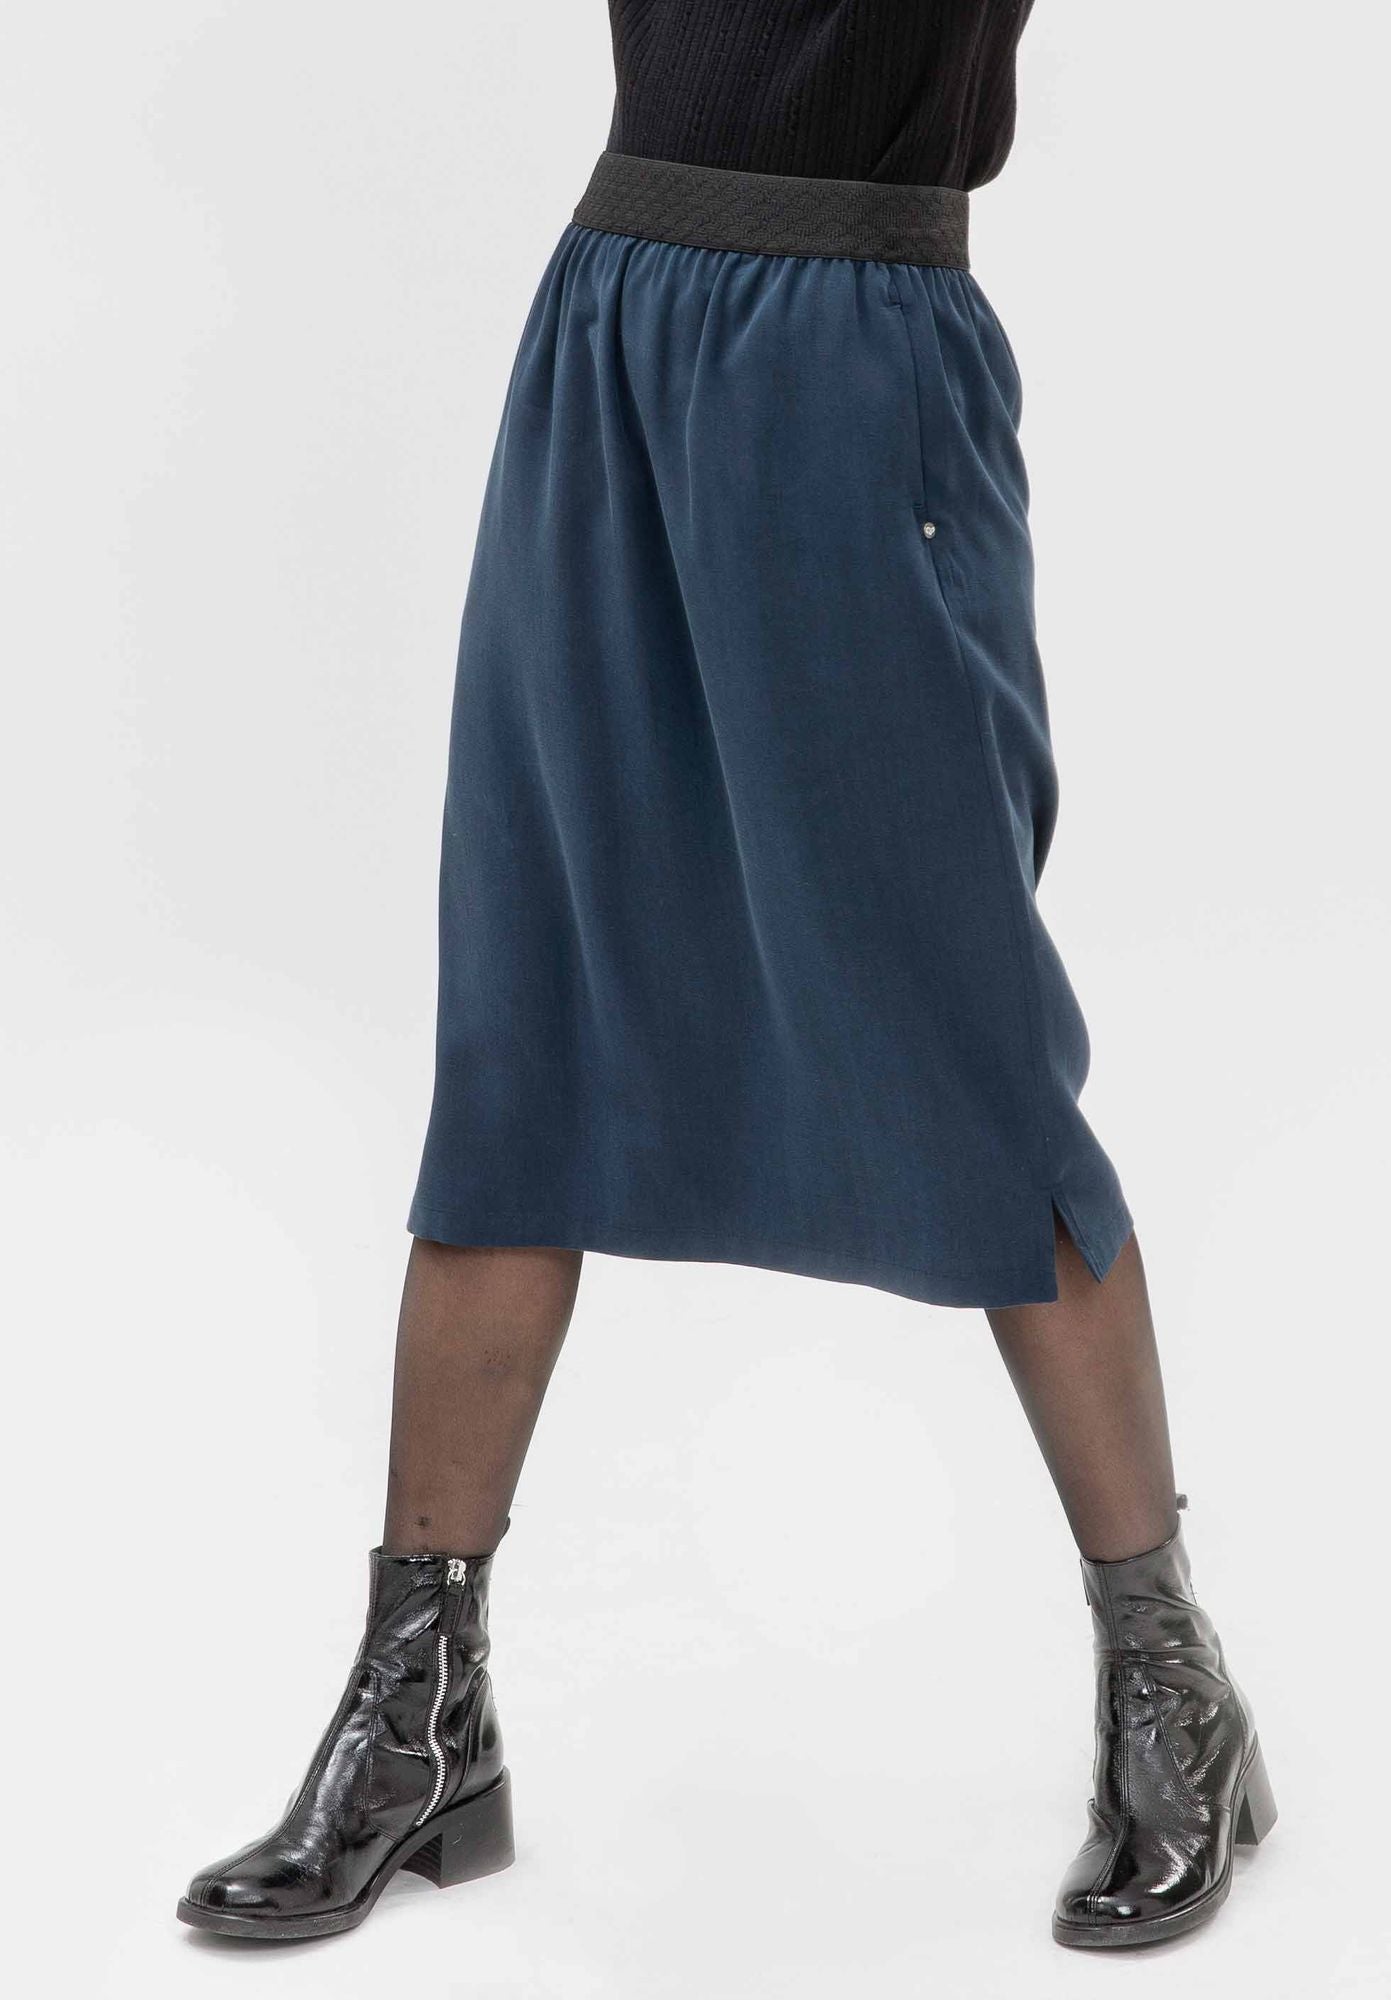 Skirt HIMANKA in gray blue by LOVJOI made of TENCEL™